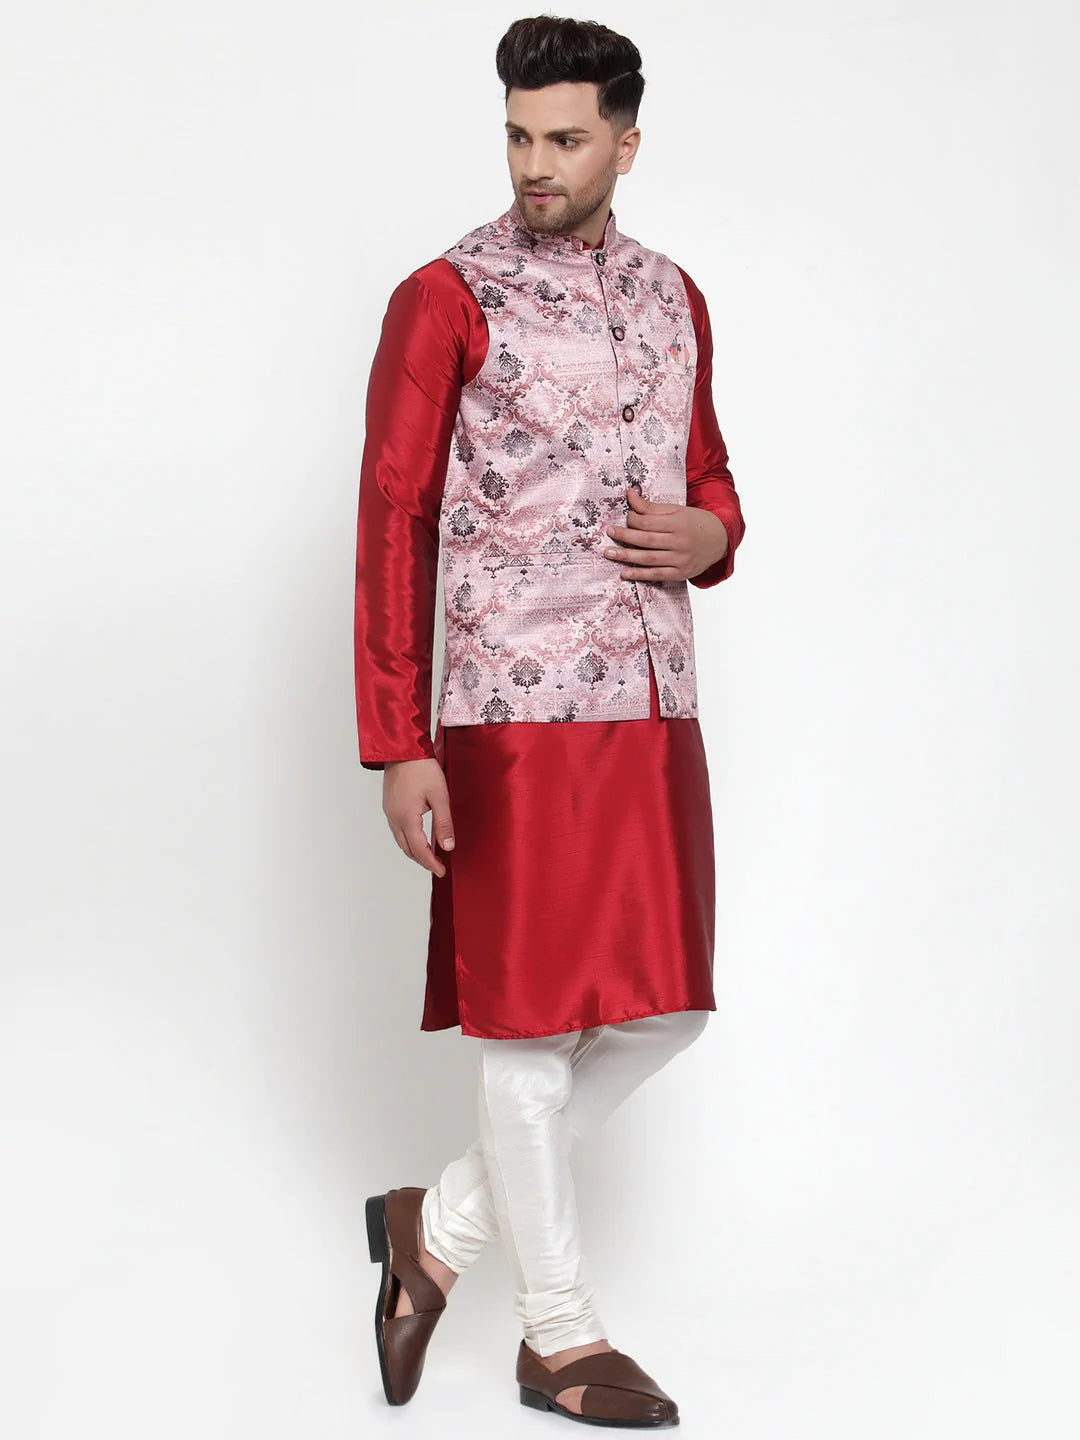 Jompers Men's Solid Dupion Kurta Pajama with Printed Nehru Jacket ( JOKPWC M-D 4014Pink )